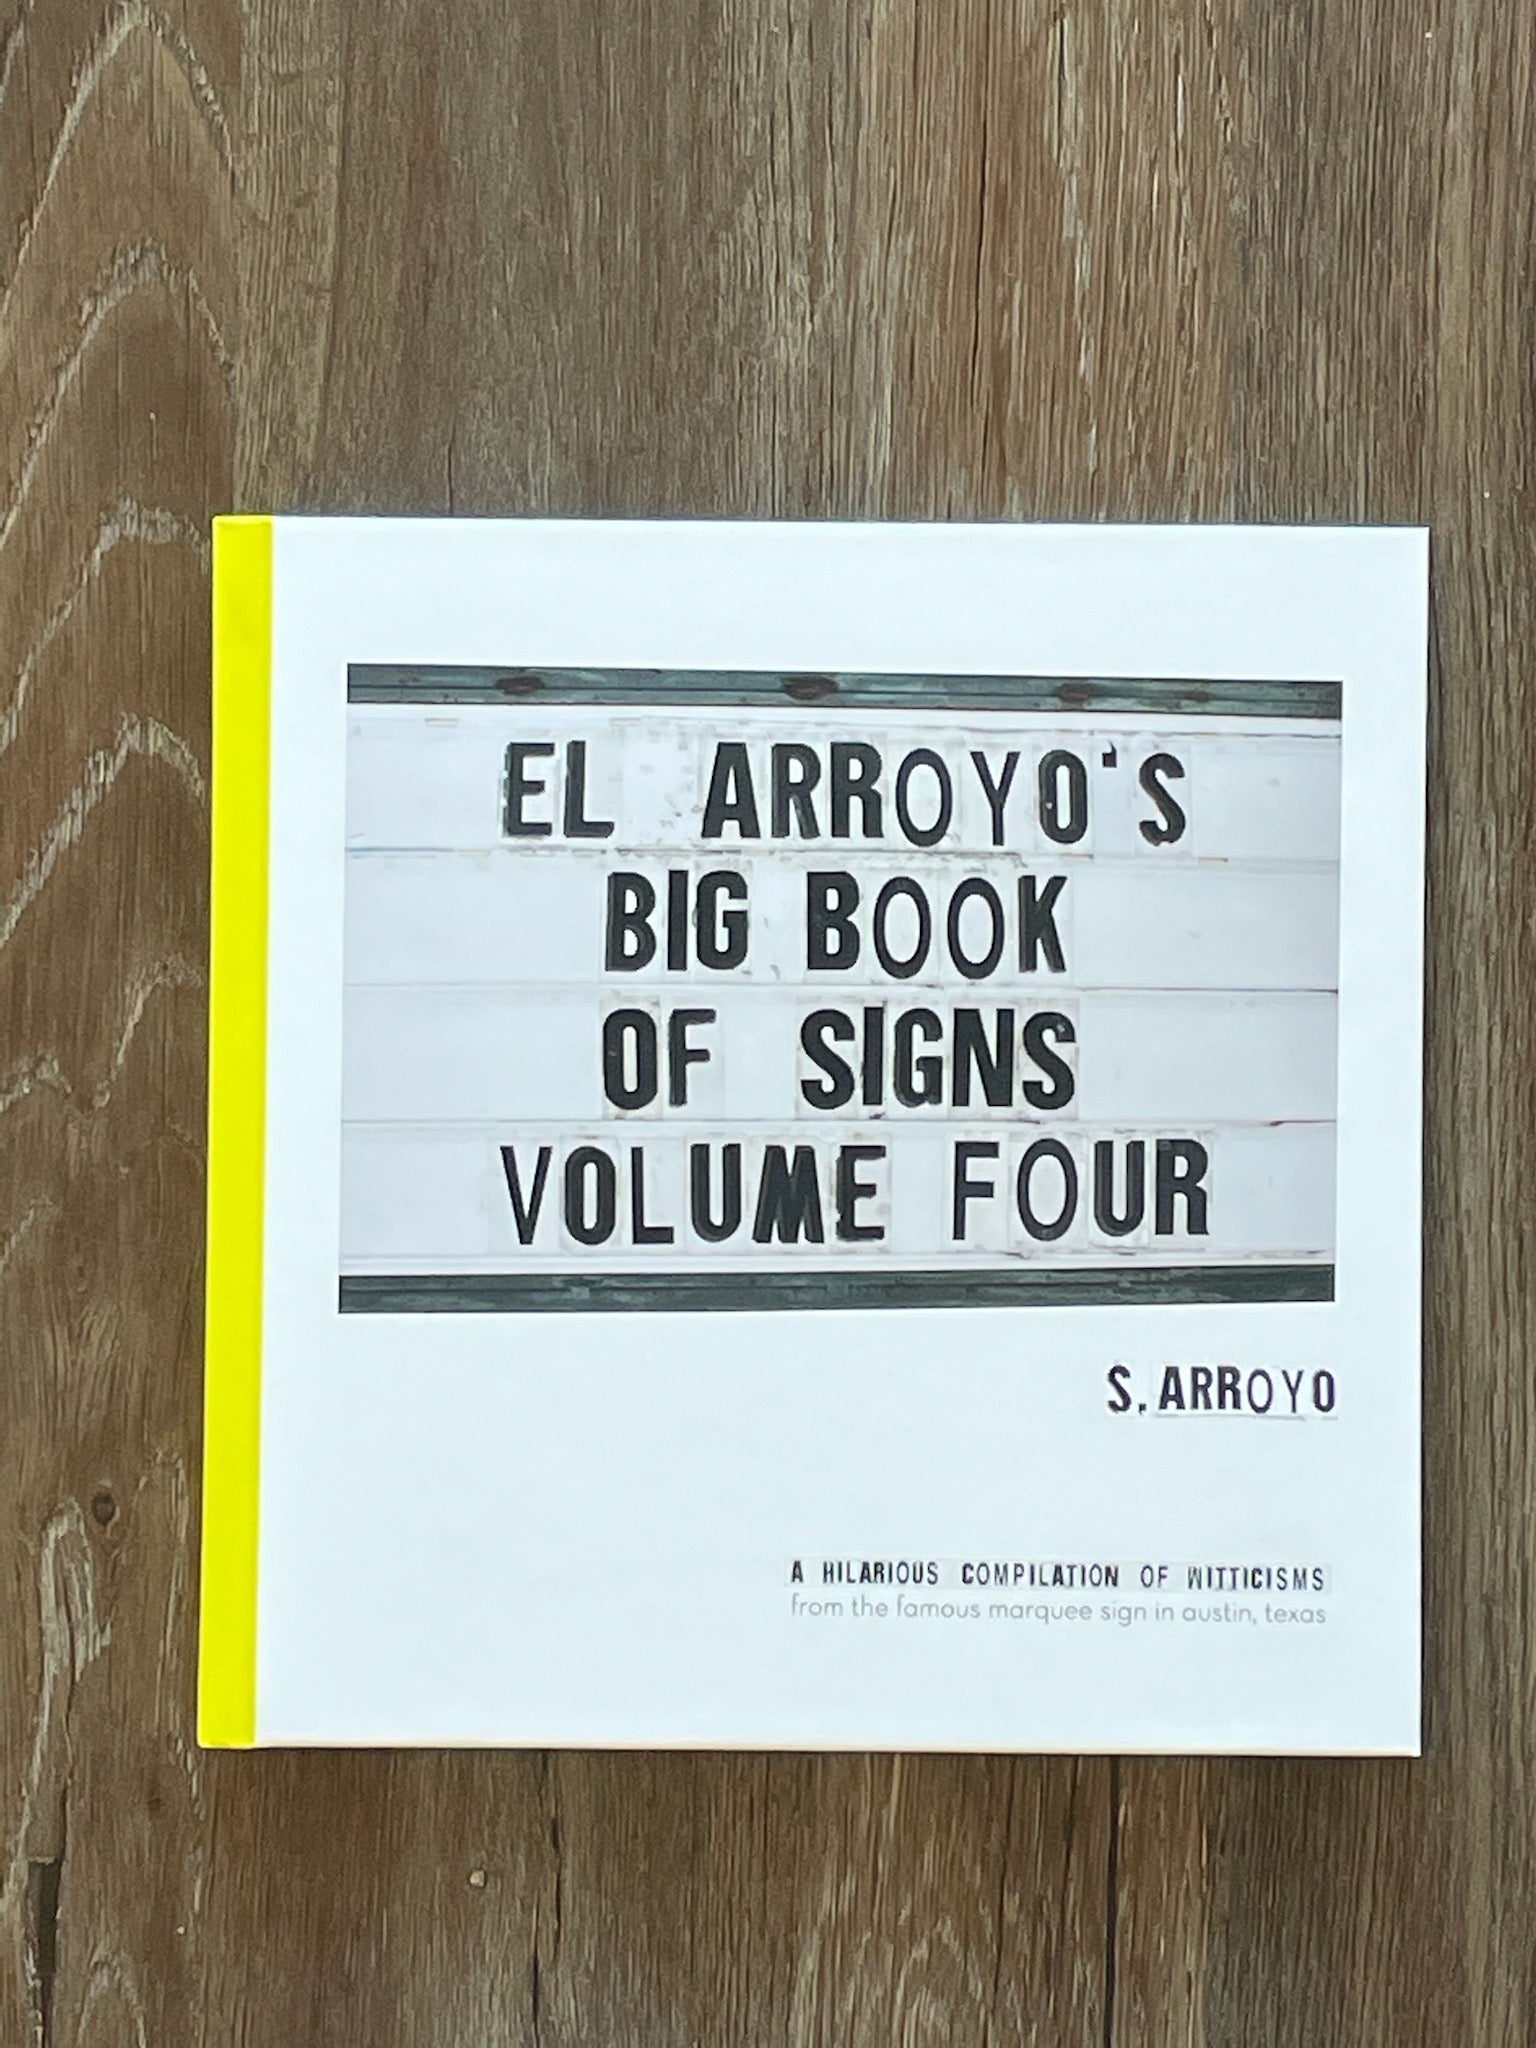 El Arroyo's Big Book of Signs Vol Four